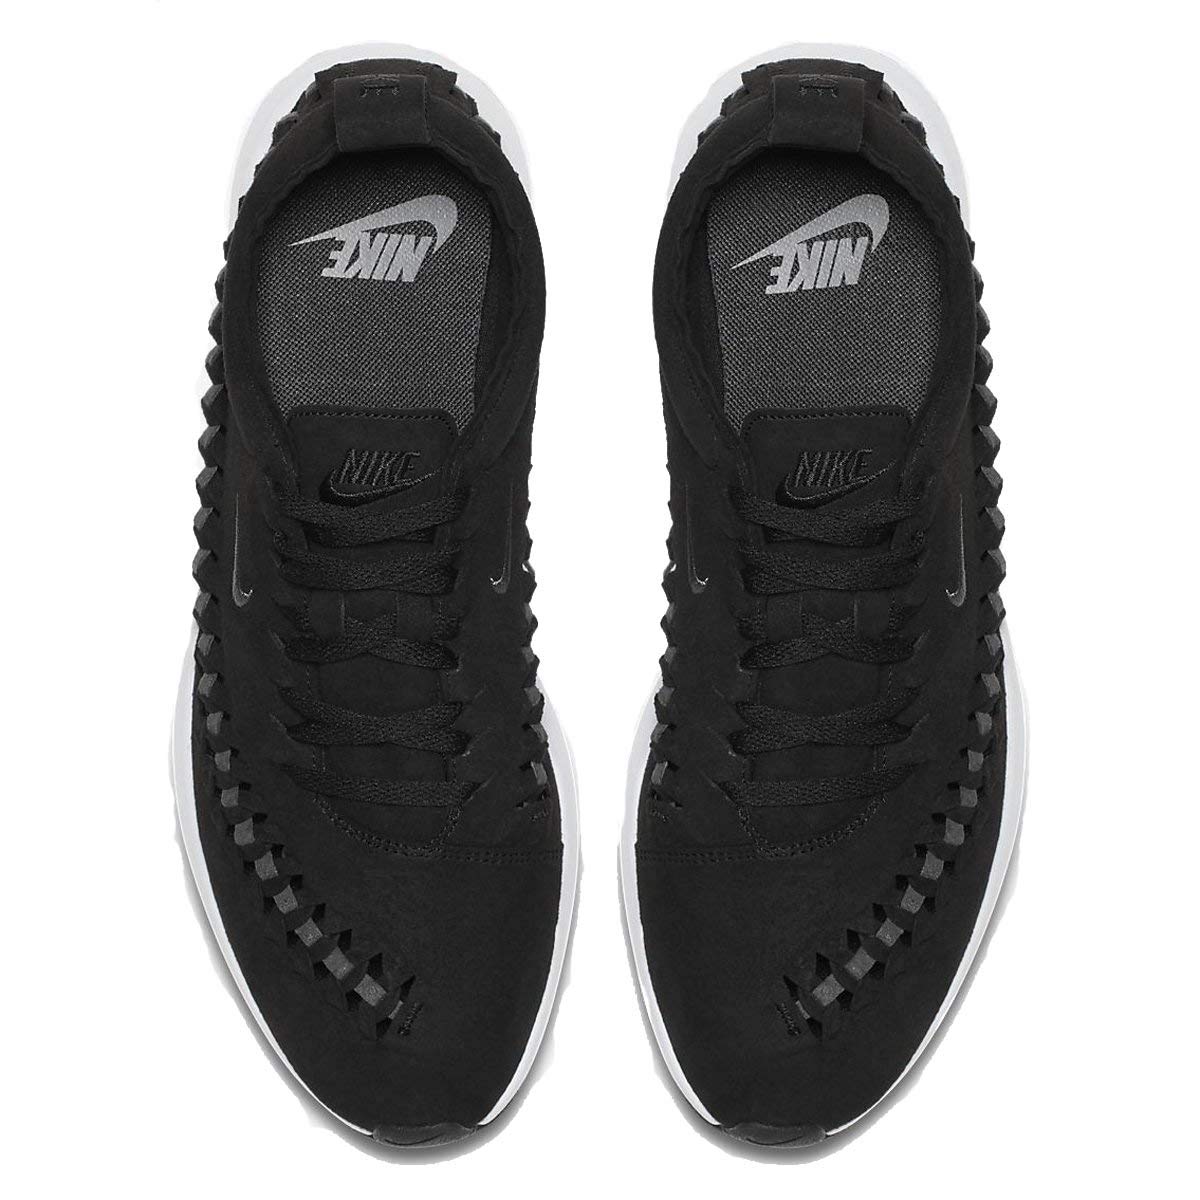 Nike Men's Dualtone Racer Woven Running Shoes (9.5, Black/Dark Grey-white) - image 5 of 6